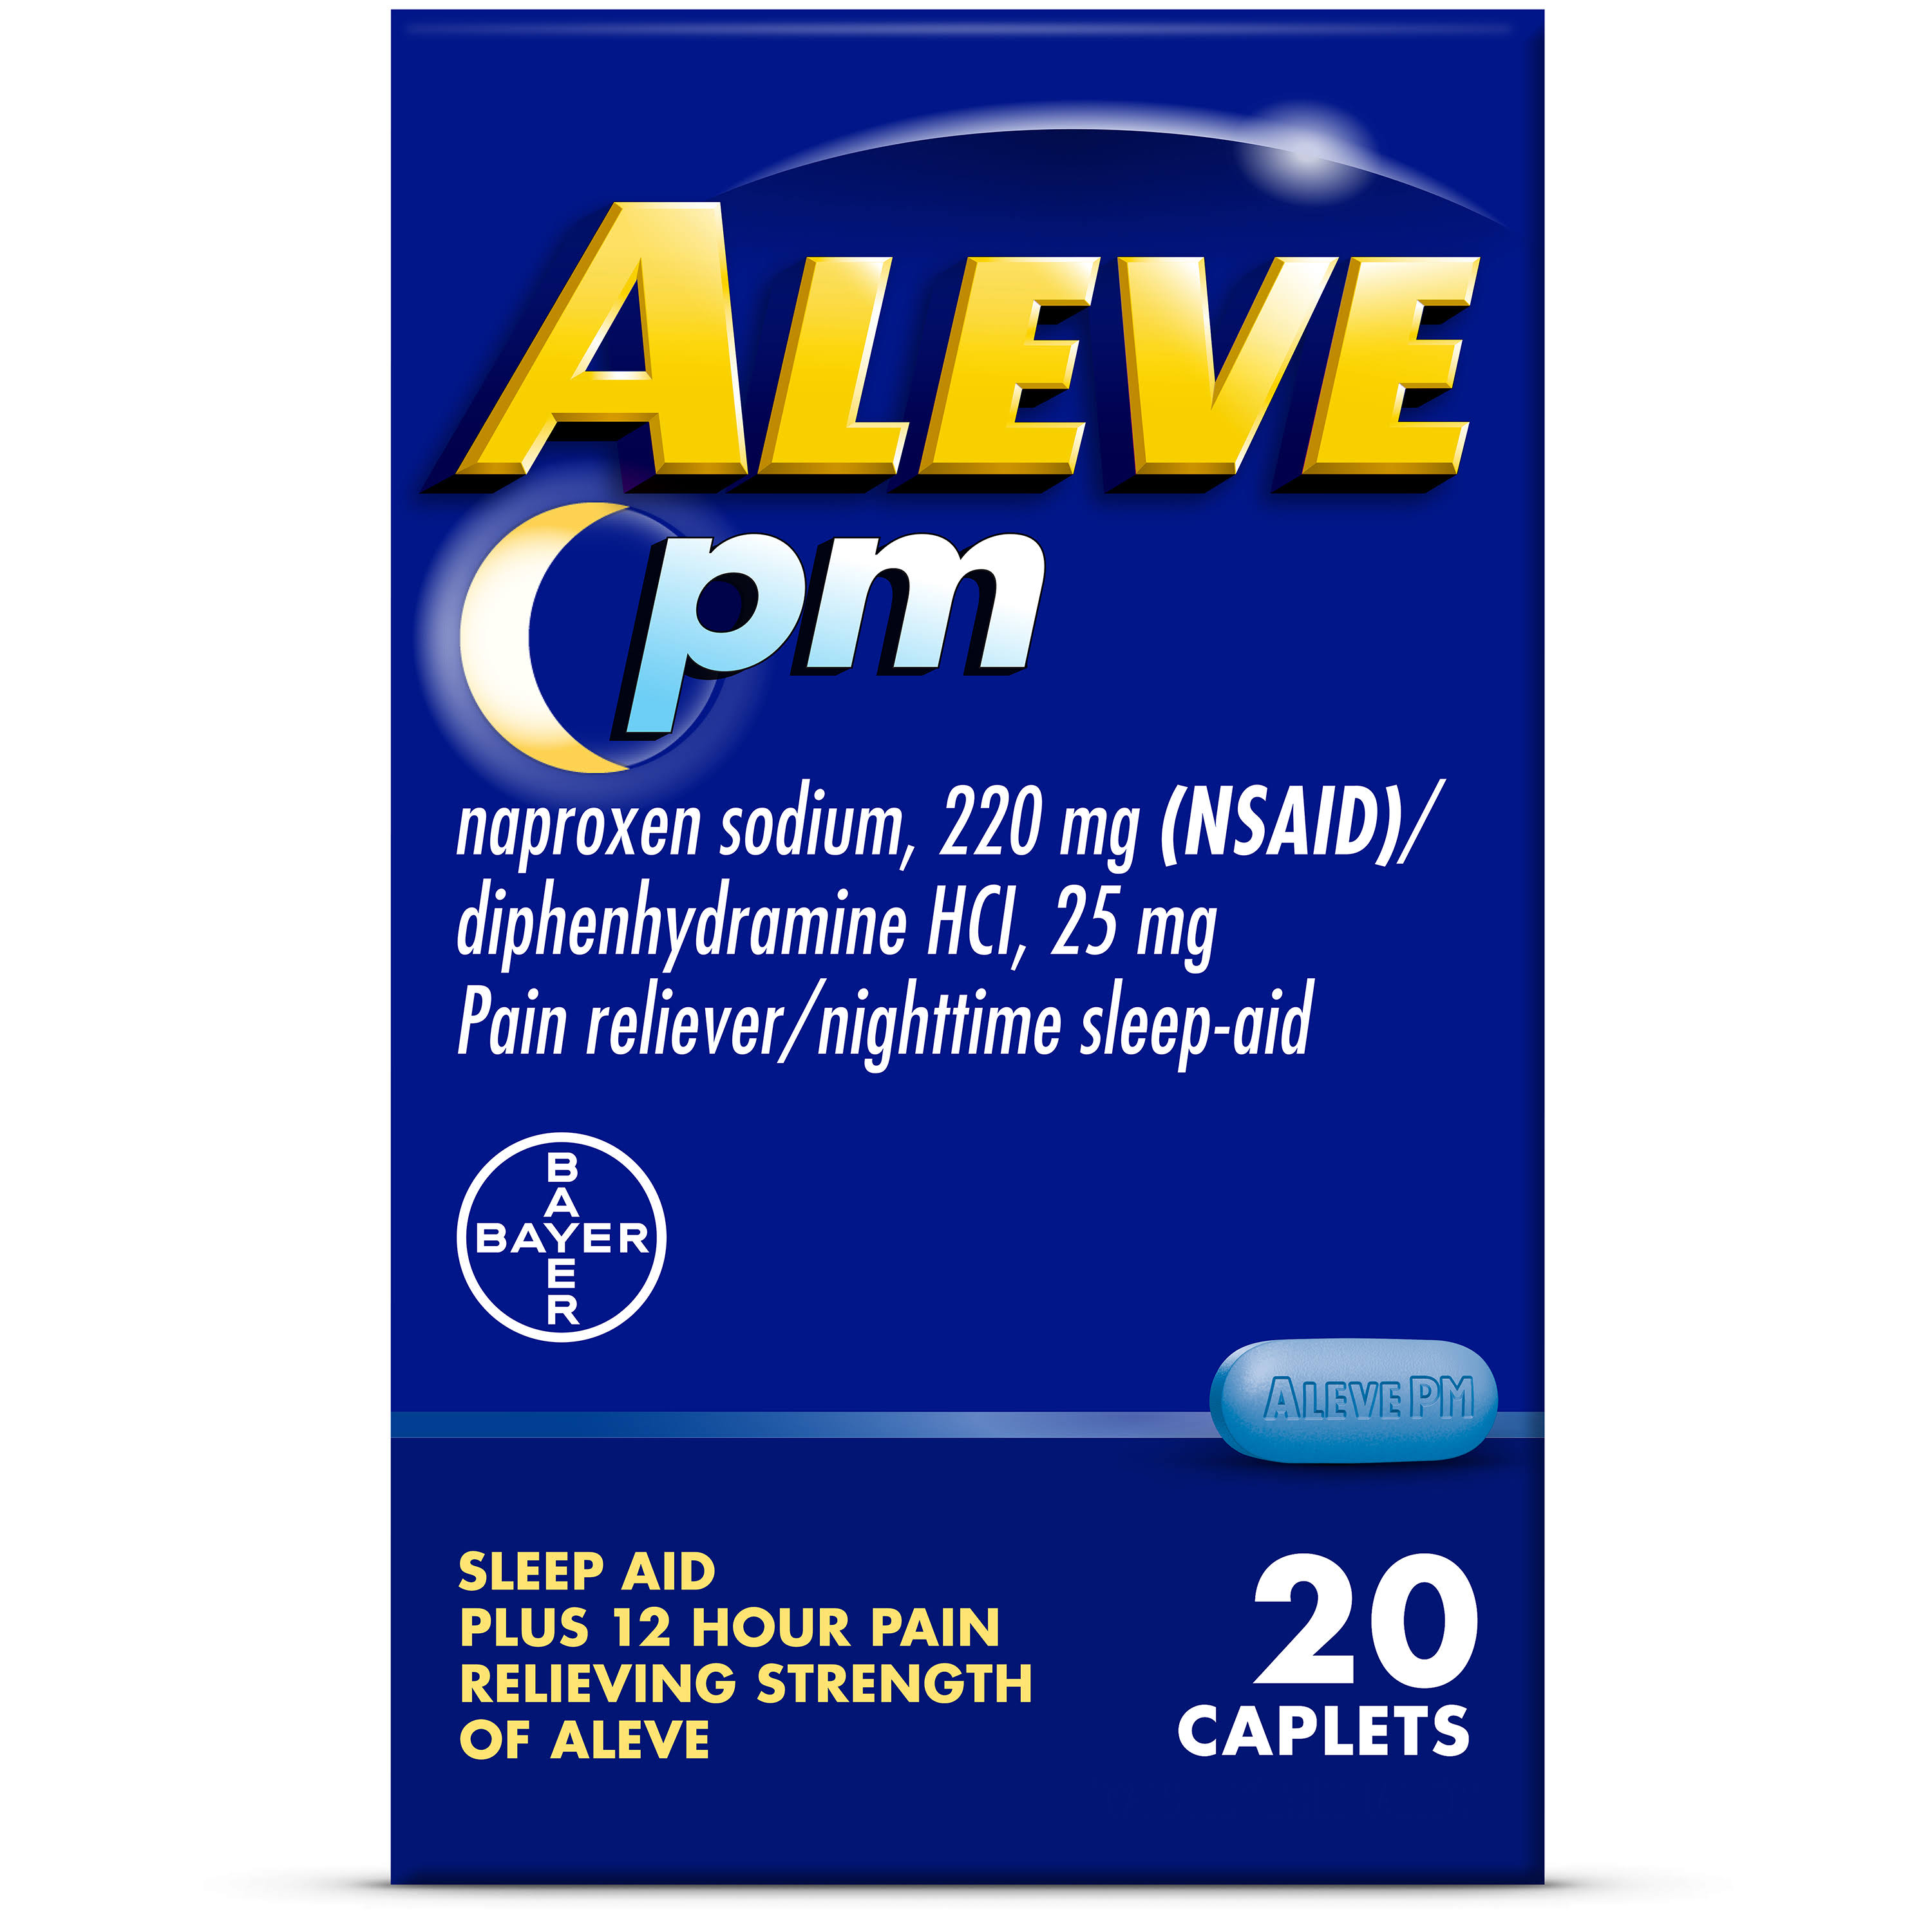 Aleve Pain Reliever/Nighttime Sleep-Aid, 220 mg, Caplets, PM - 20 caplets